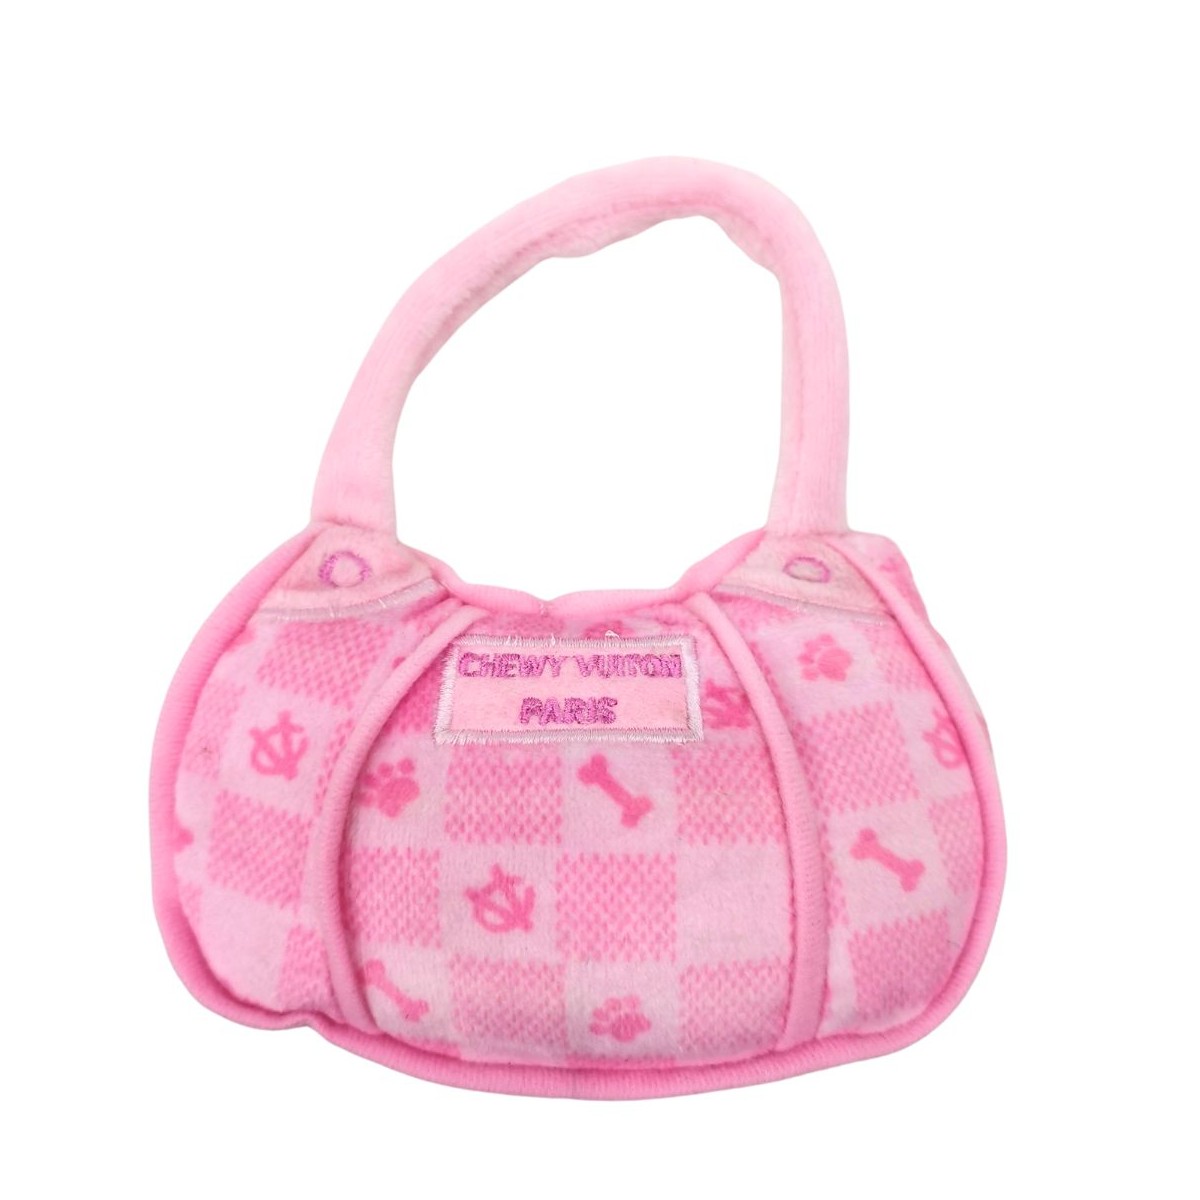 Haute Diggity Dog Chewy Vuiton Handbag Plush Dog Toy - Pink Checker